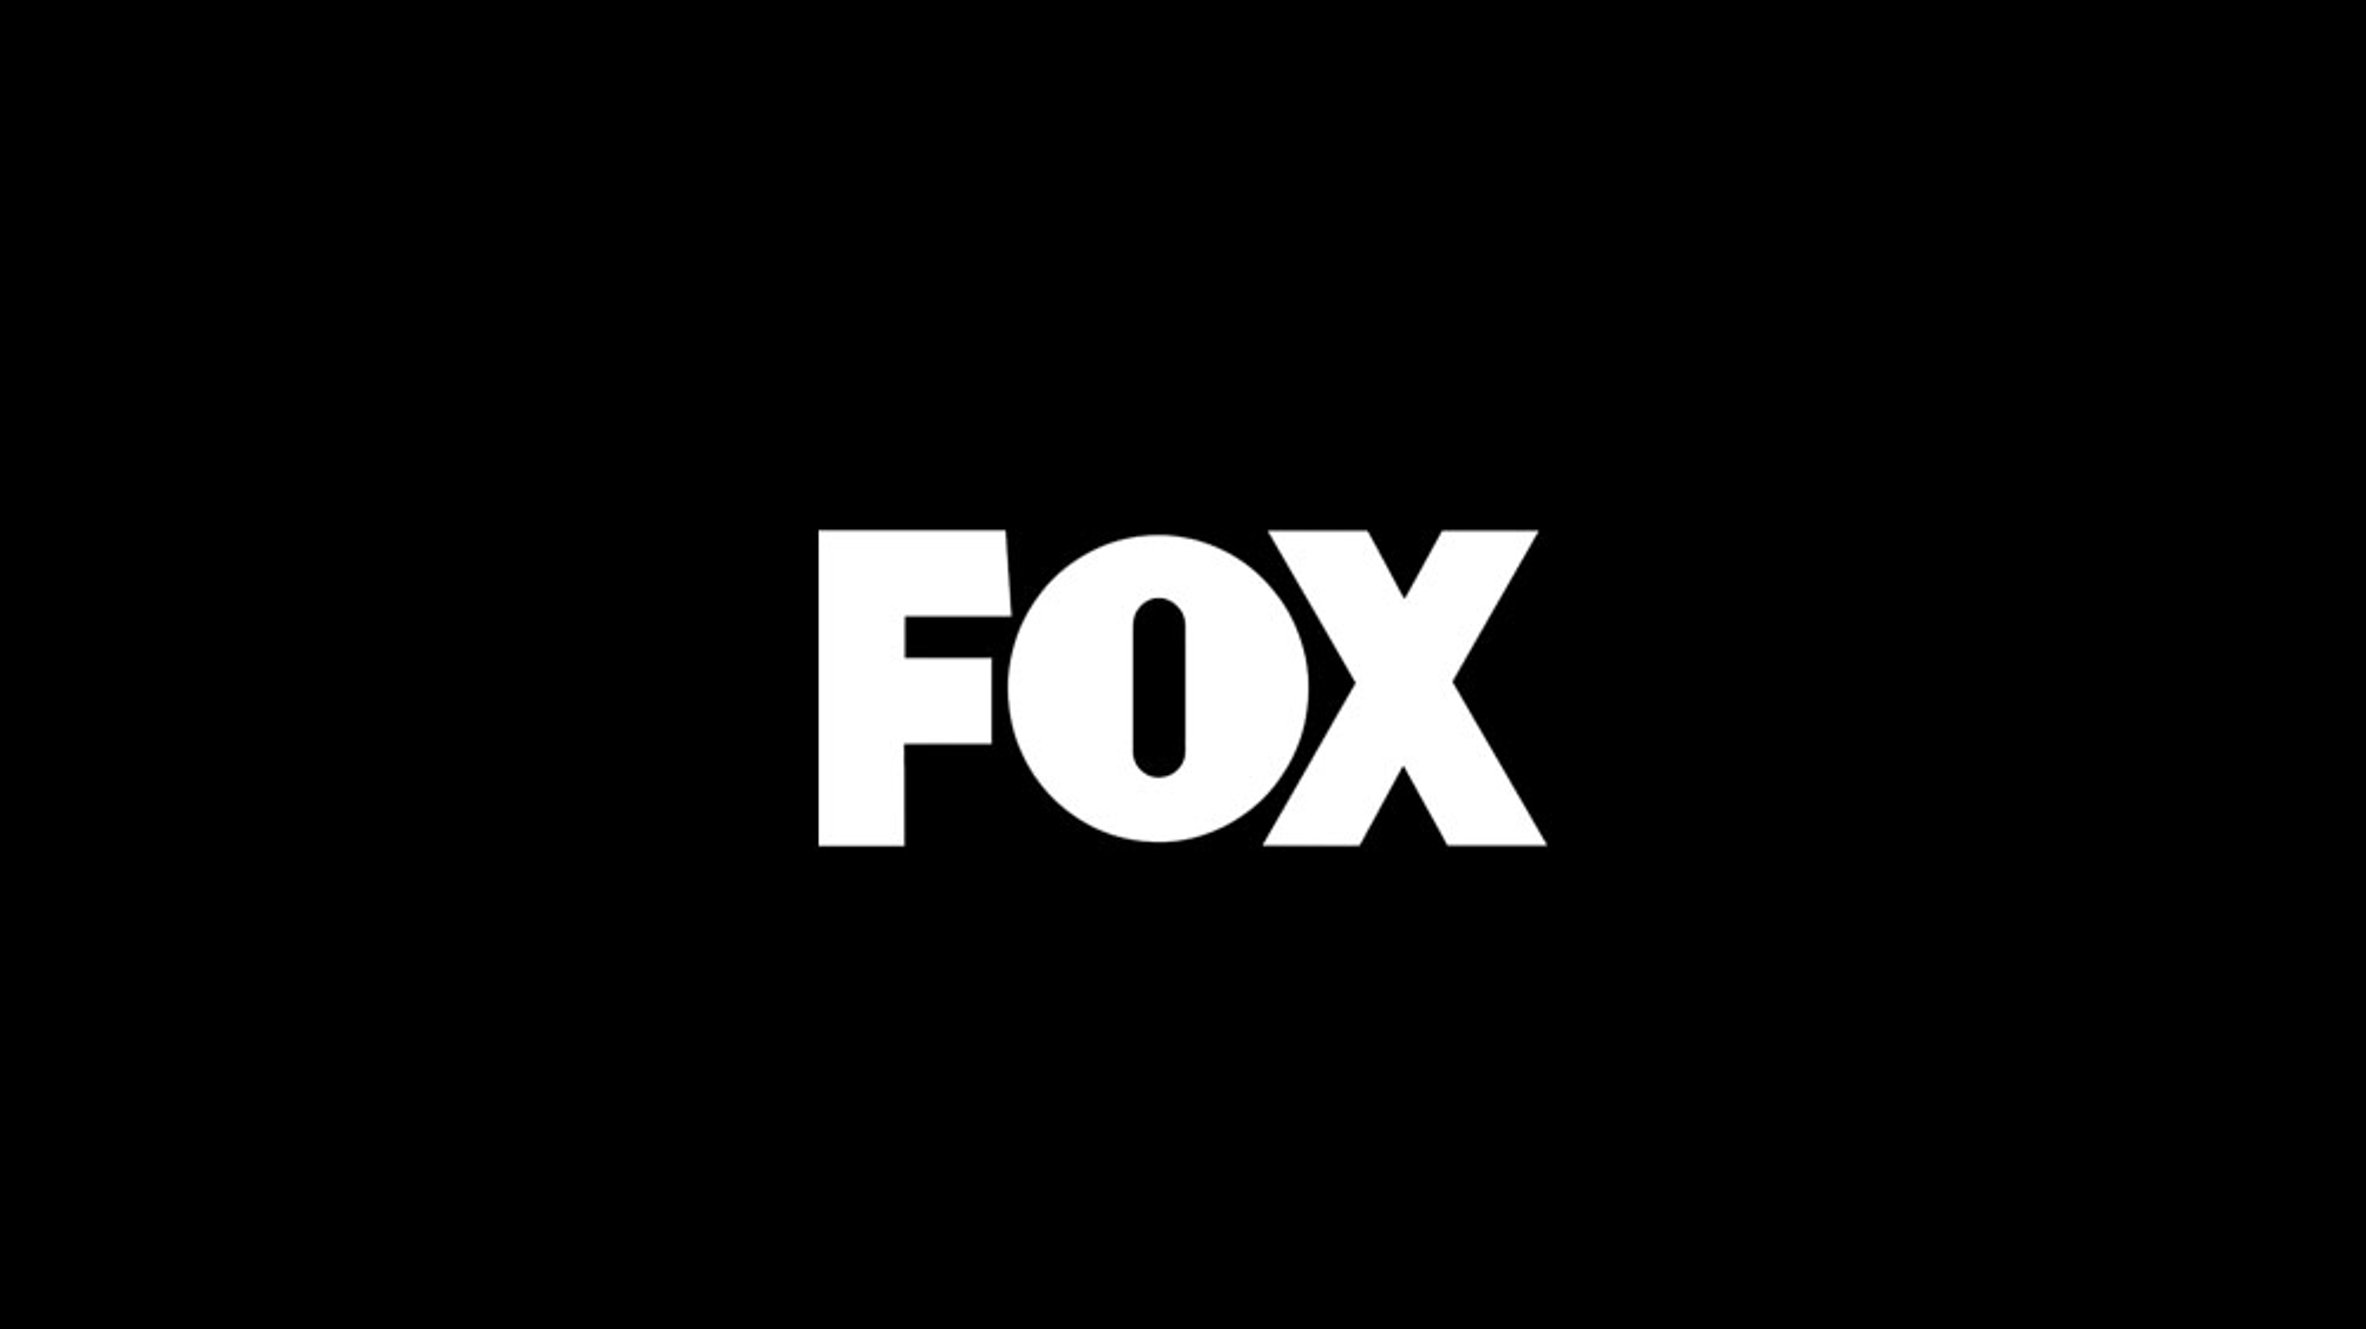 FOX TV Series The Resident Is Hiring Crew Member